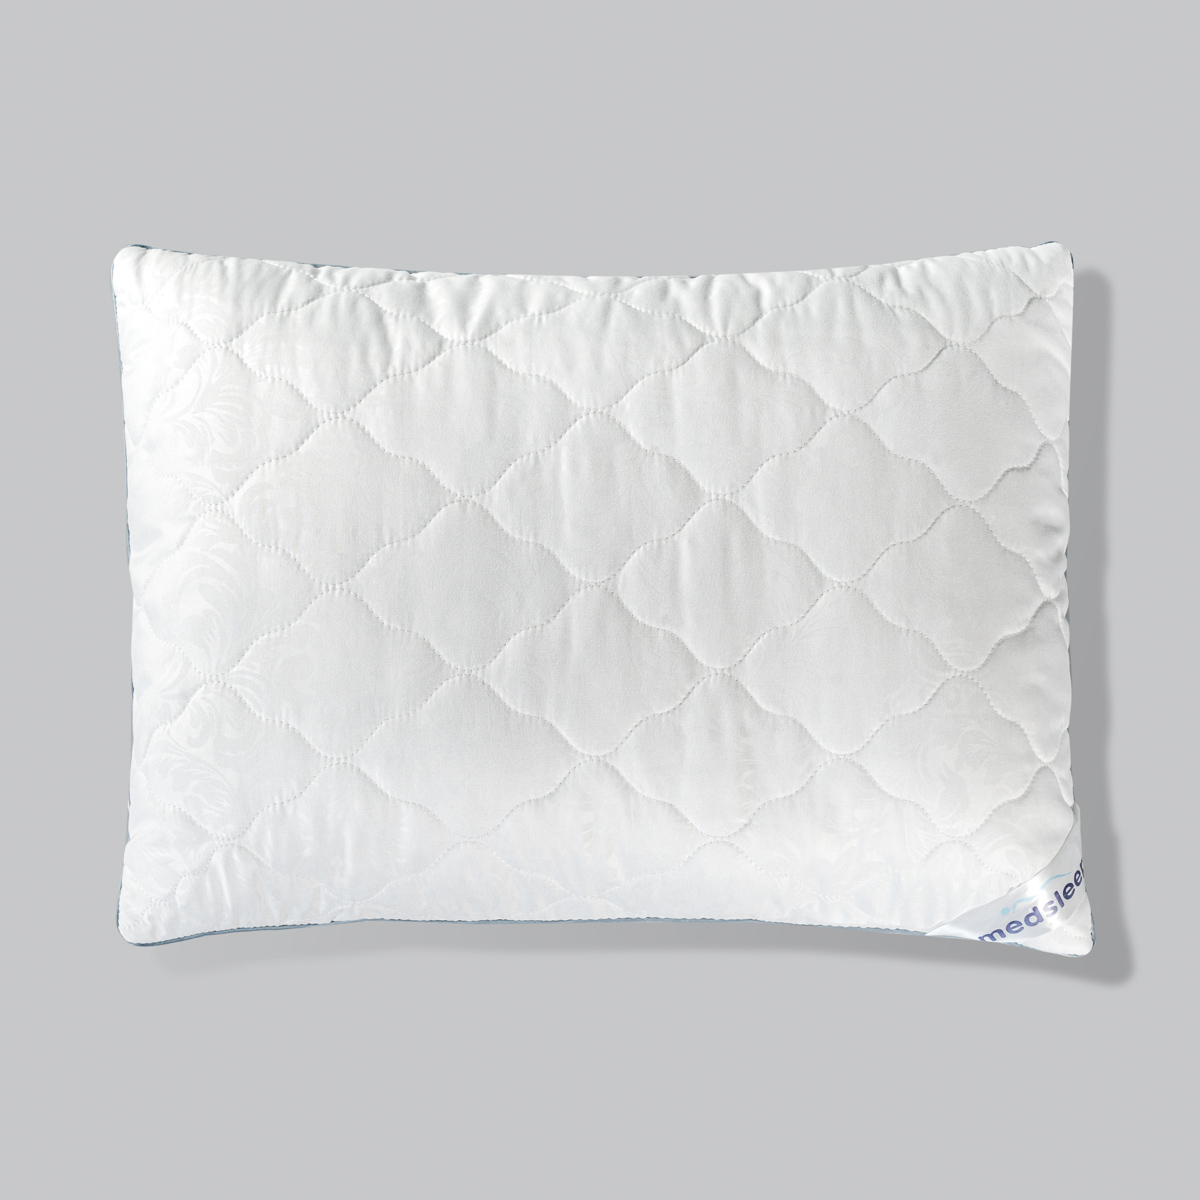 Подушка Medsleep Нотари белая 50х70 см, цвет белый